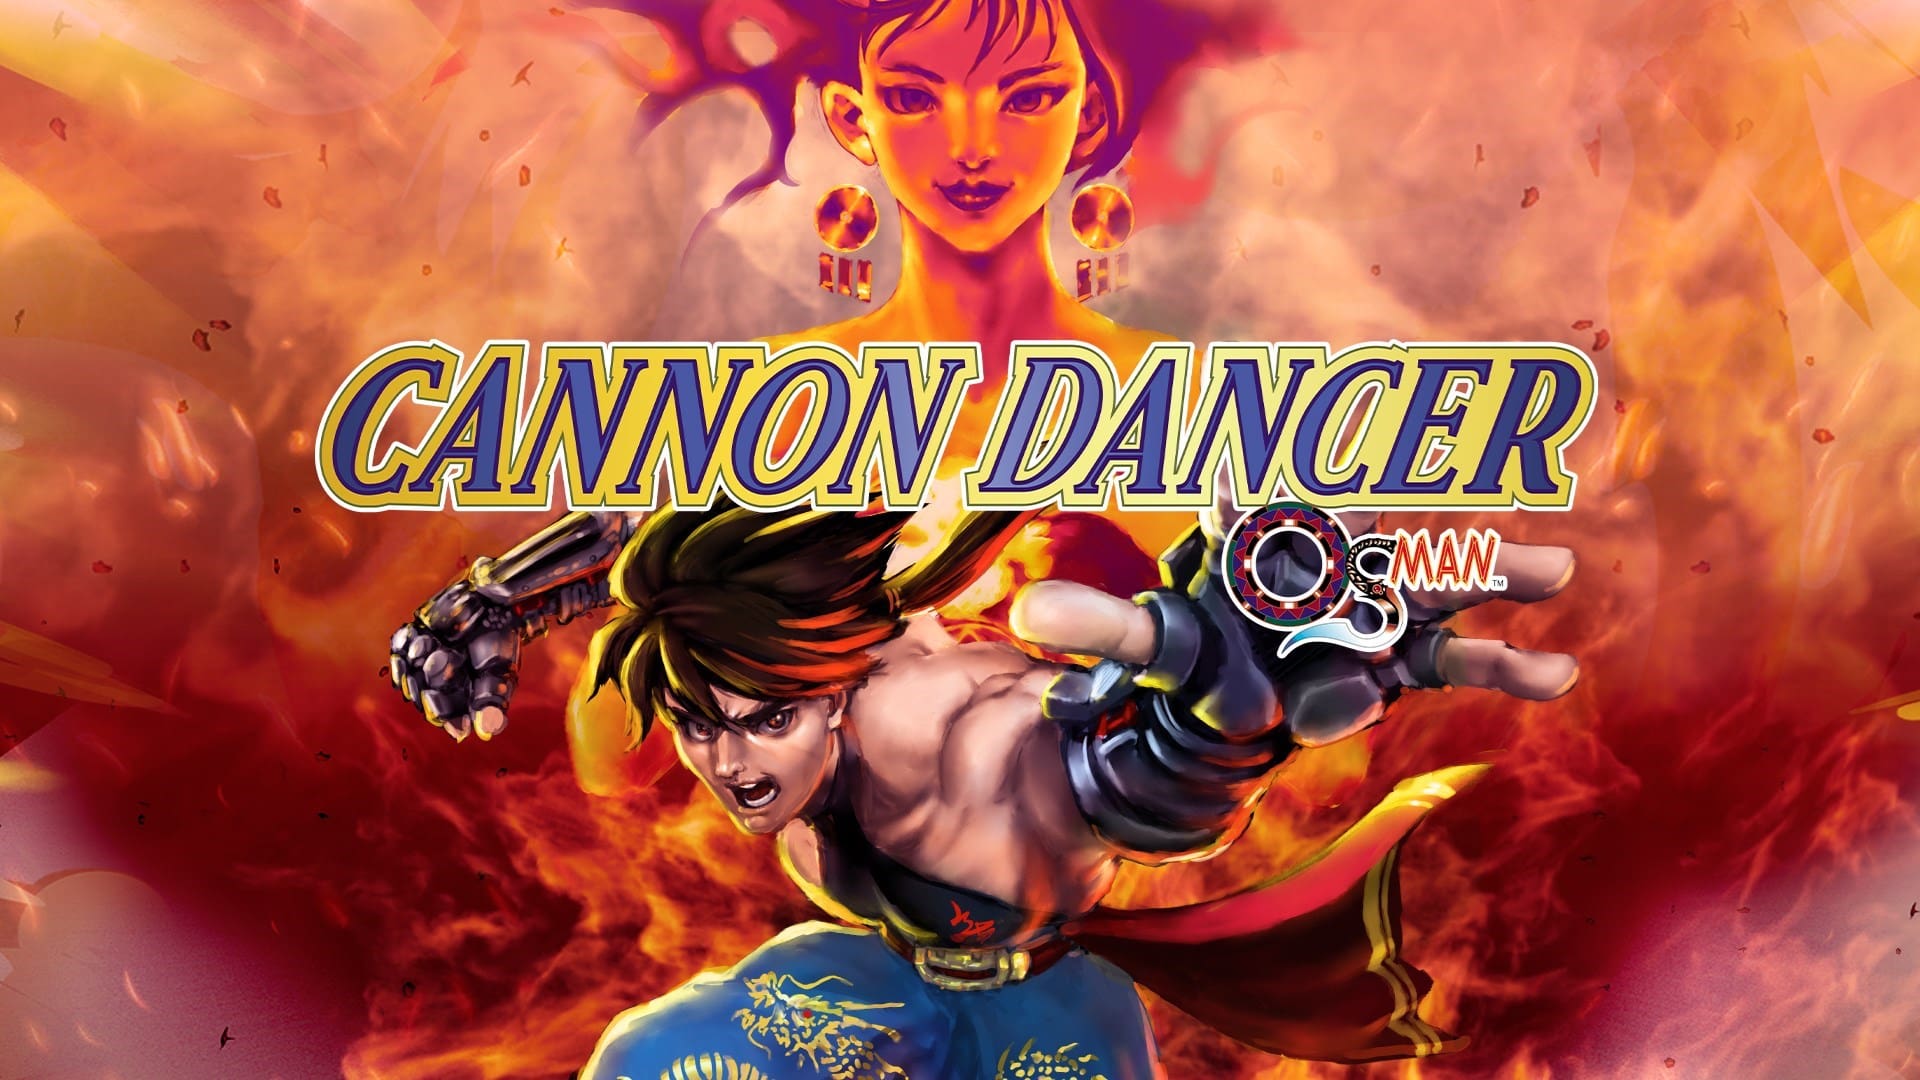 Cannon Dancer